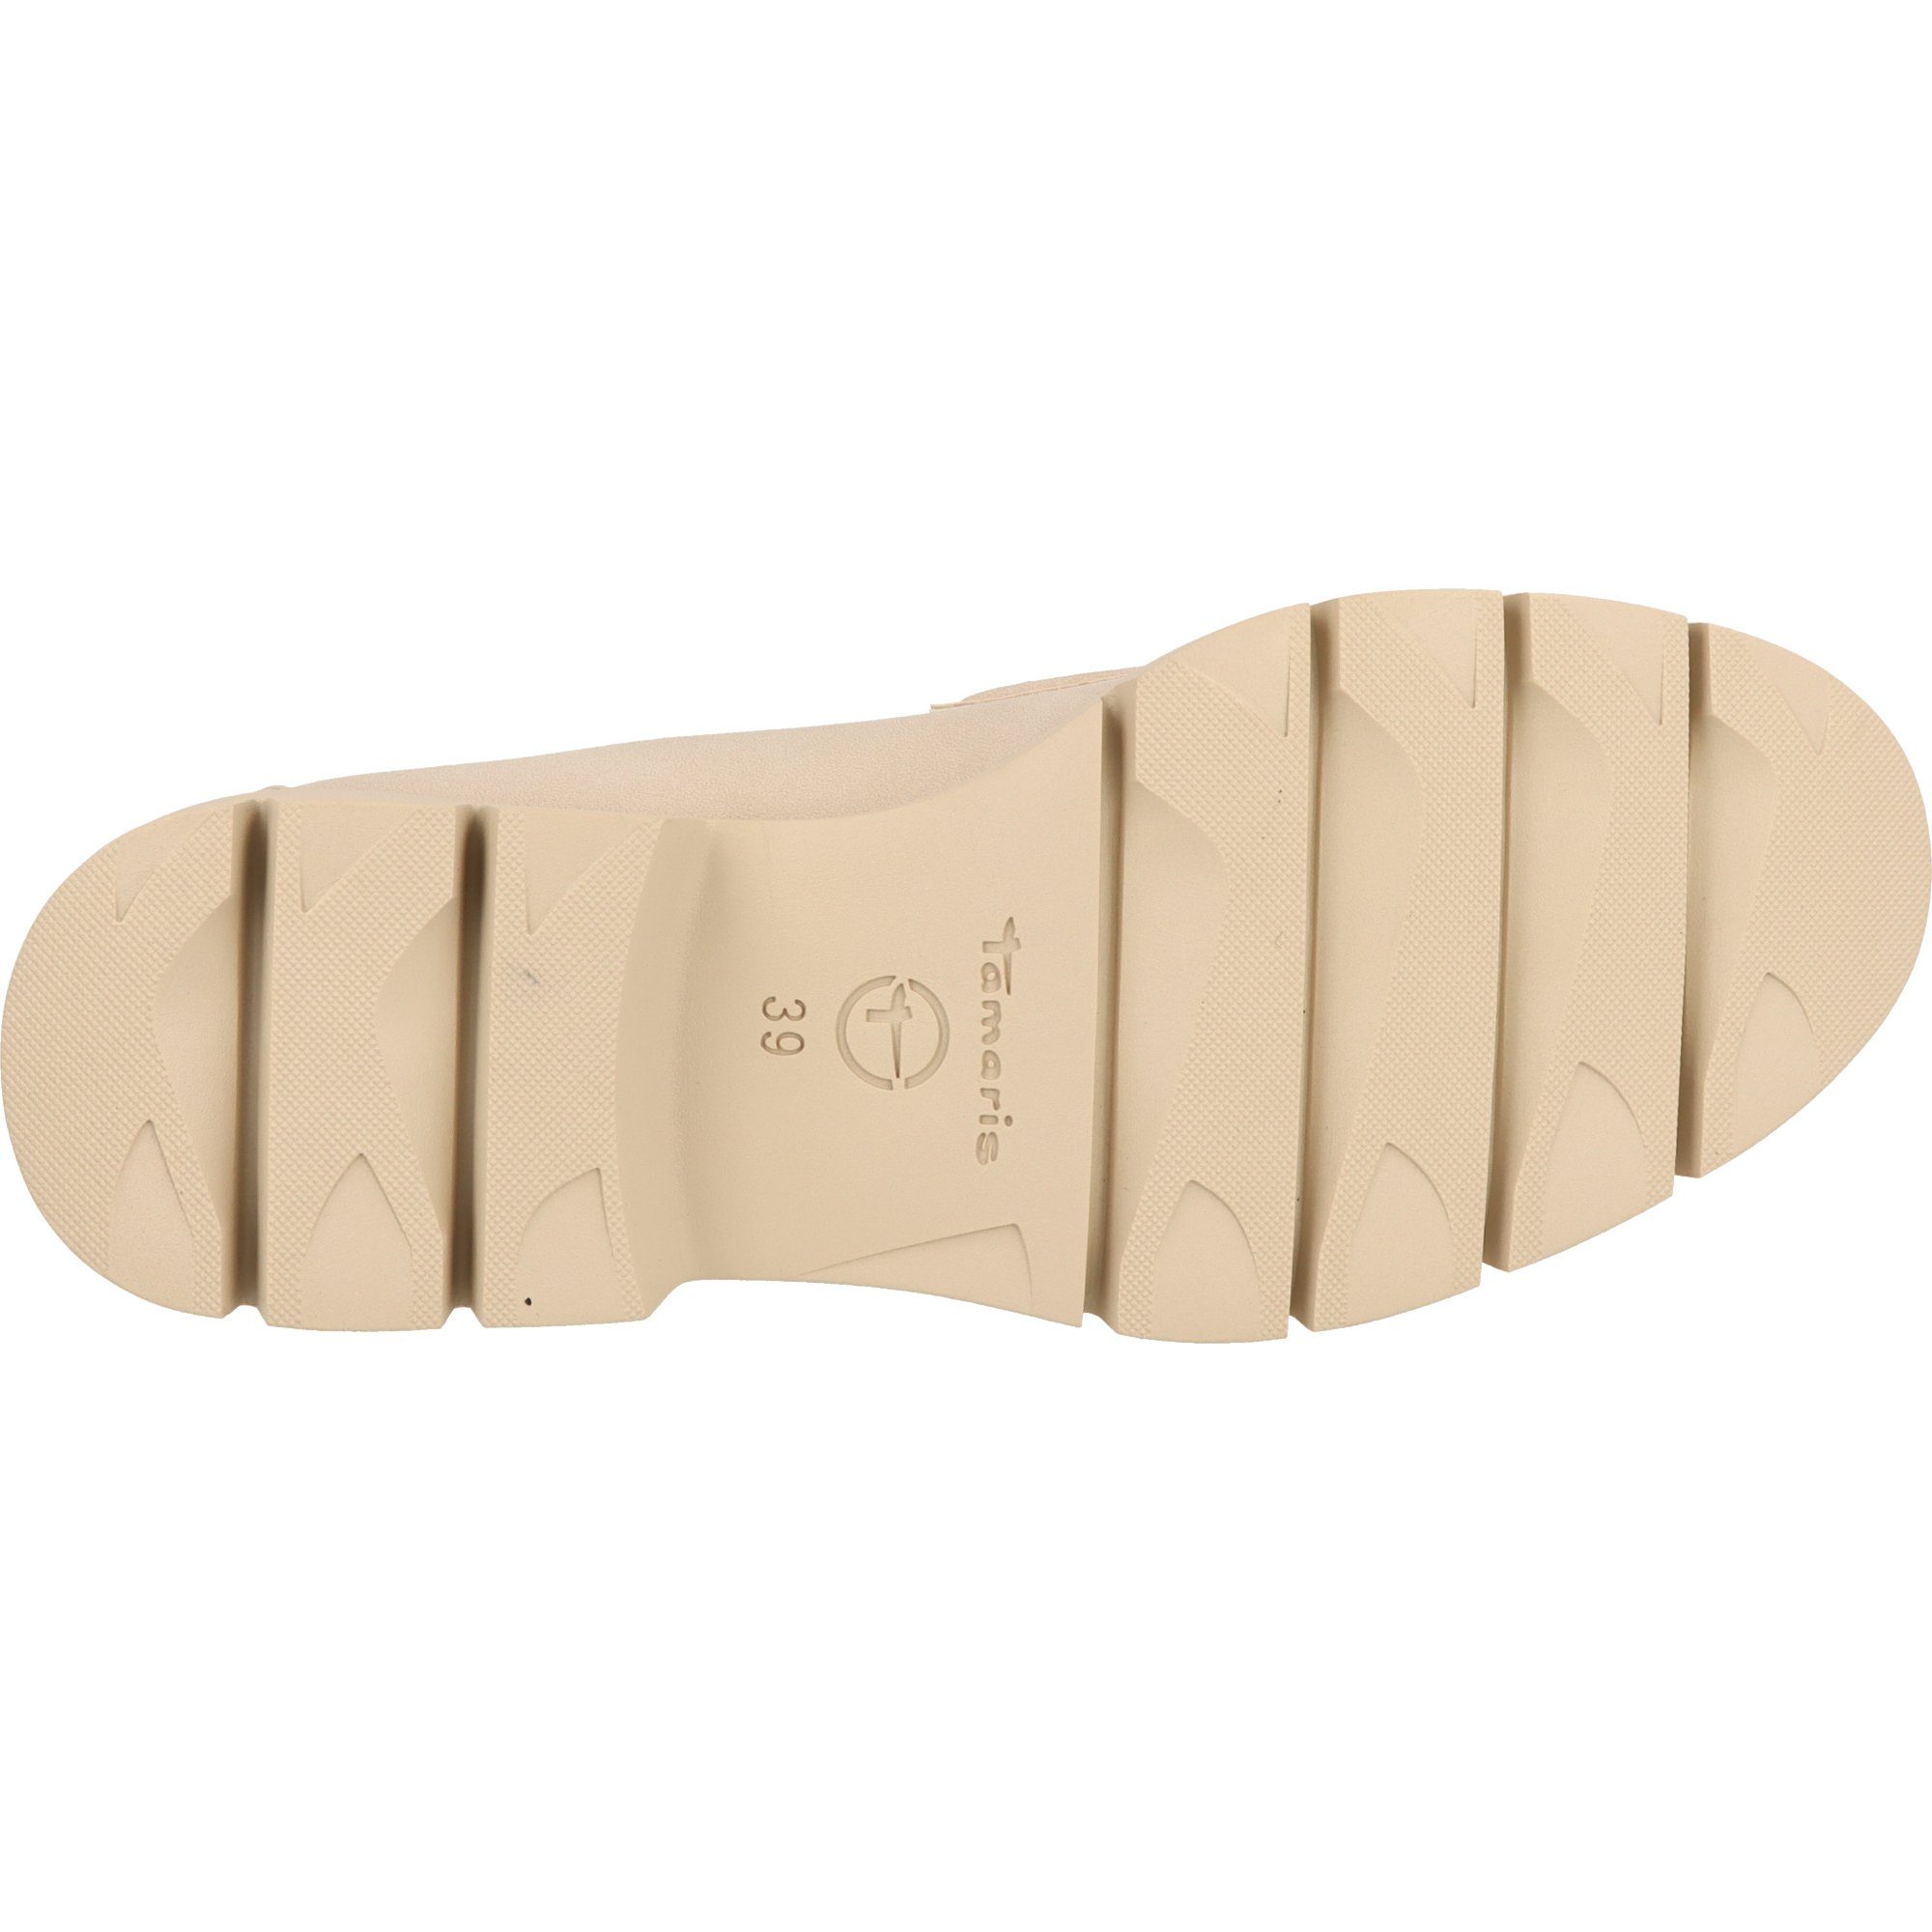 Tamaris Damen Schuhe Komfort Loafer 1-24313-41 Shell Halbschuhe Vegan Slipper